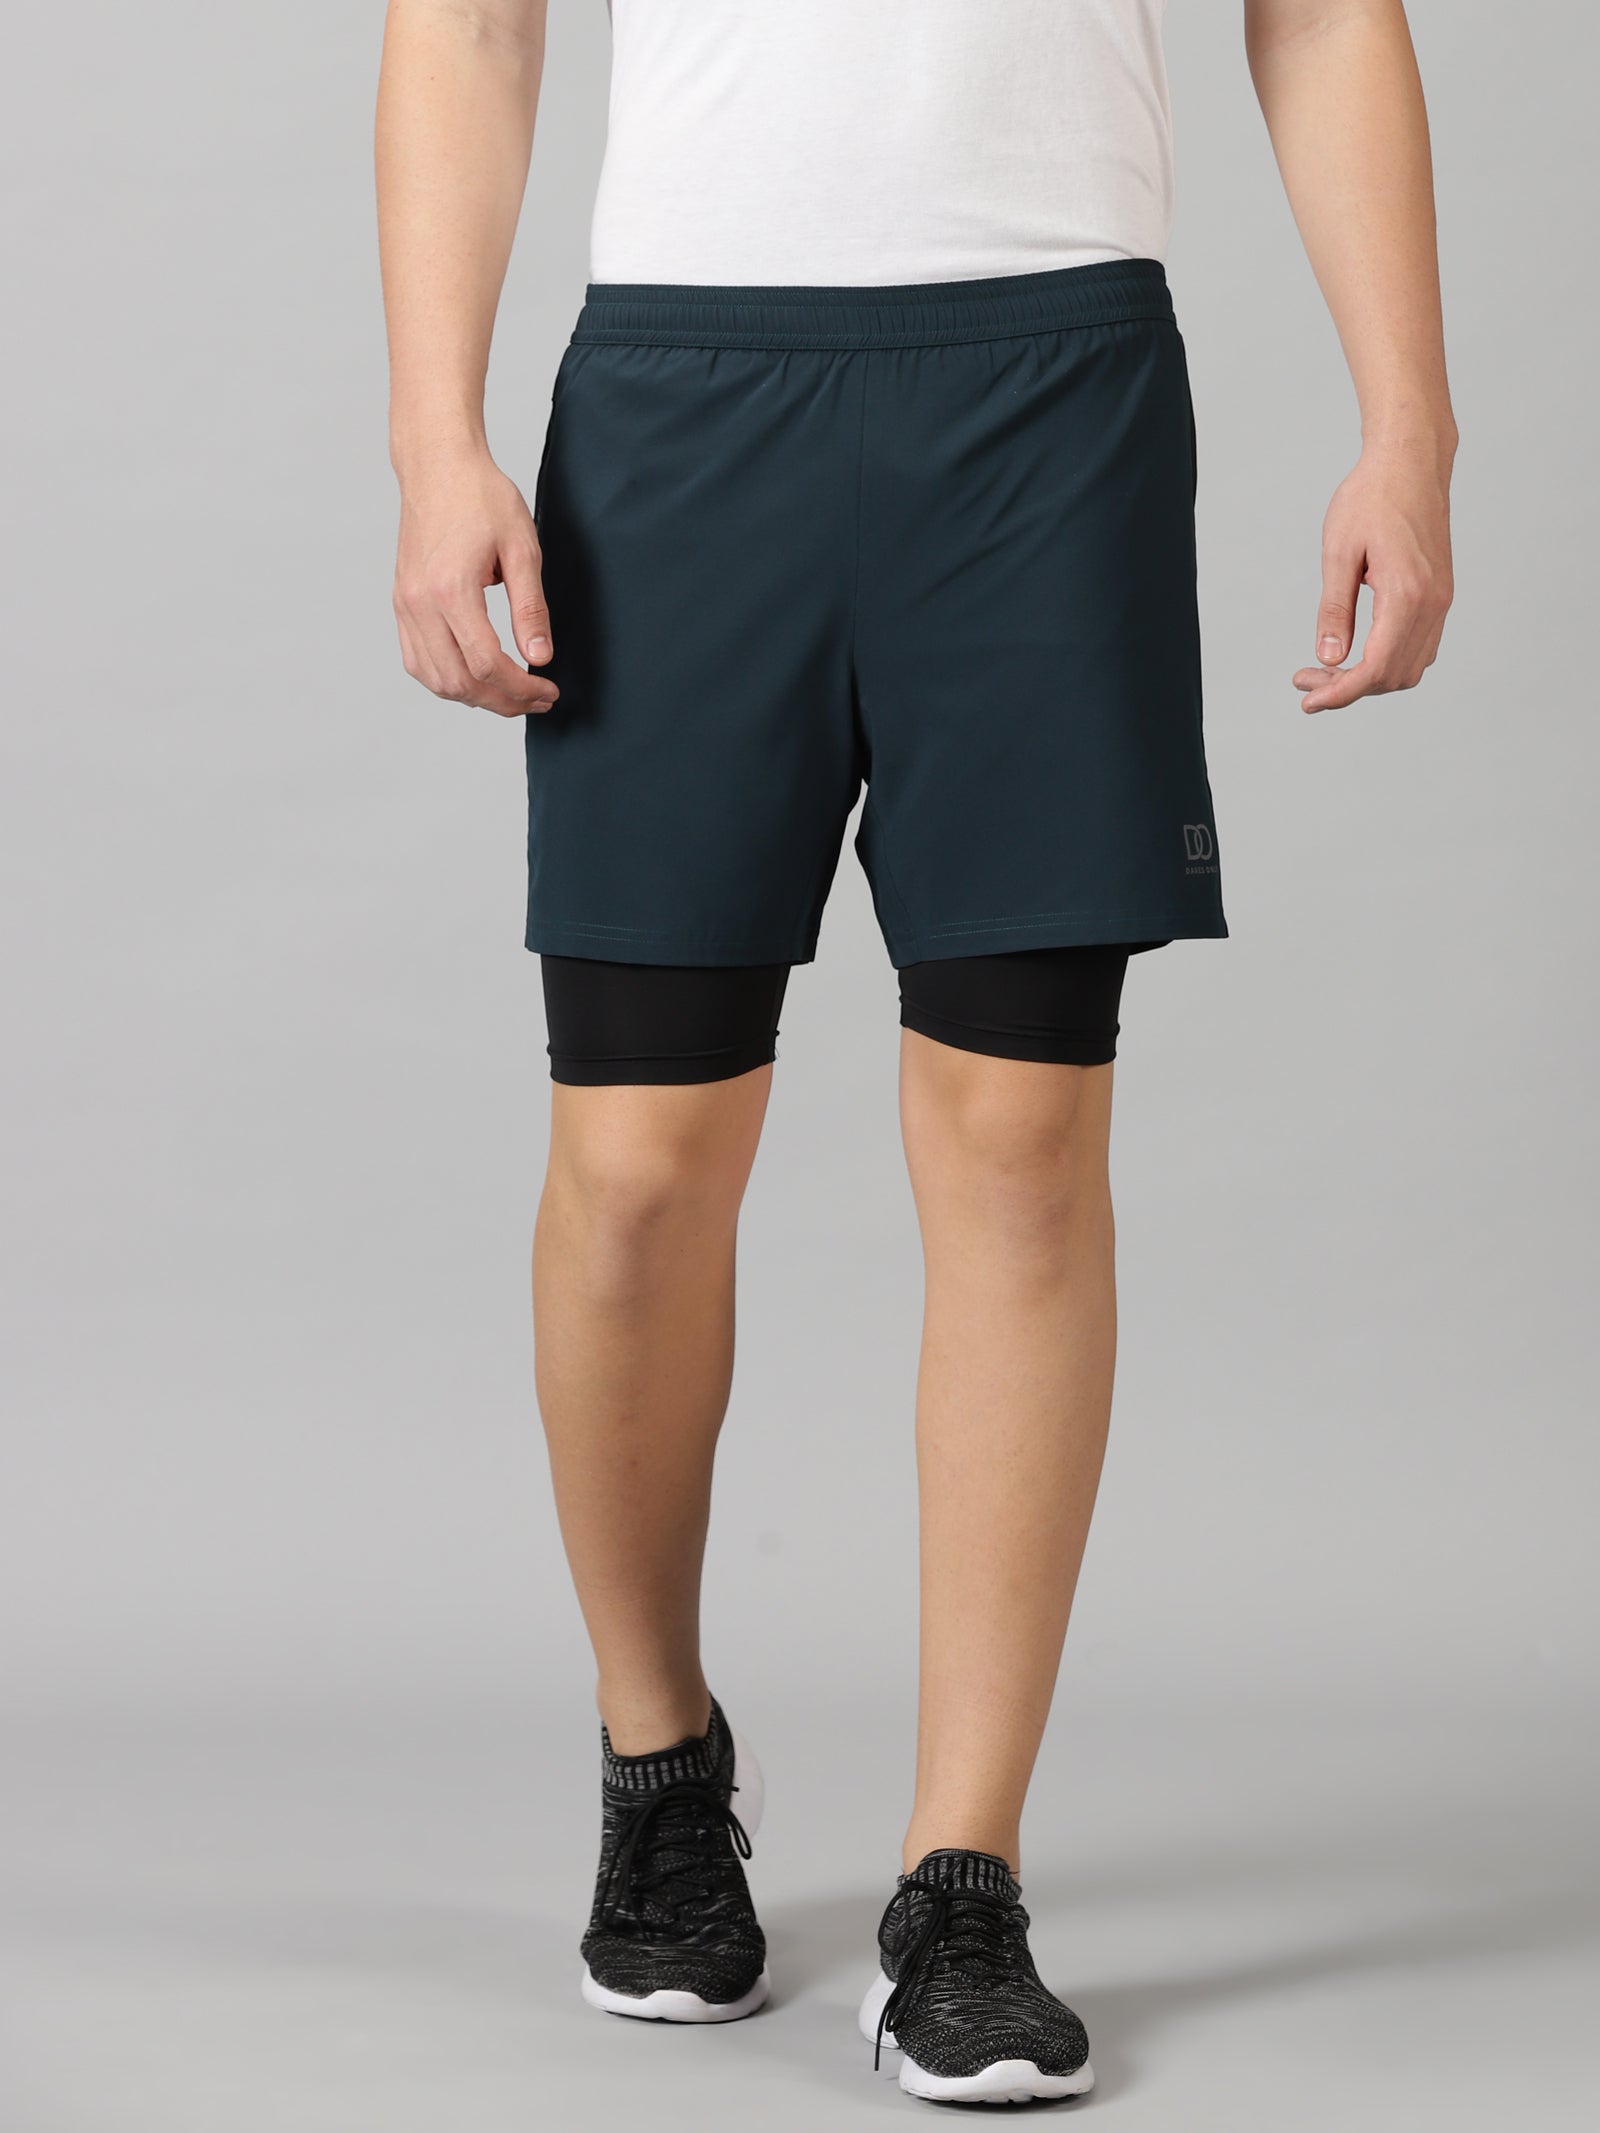 Hybrid Run shorts combo: Bistro Lake & Burgundy